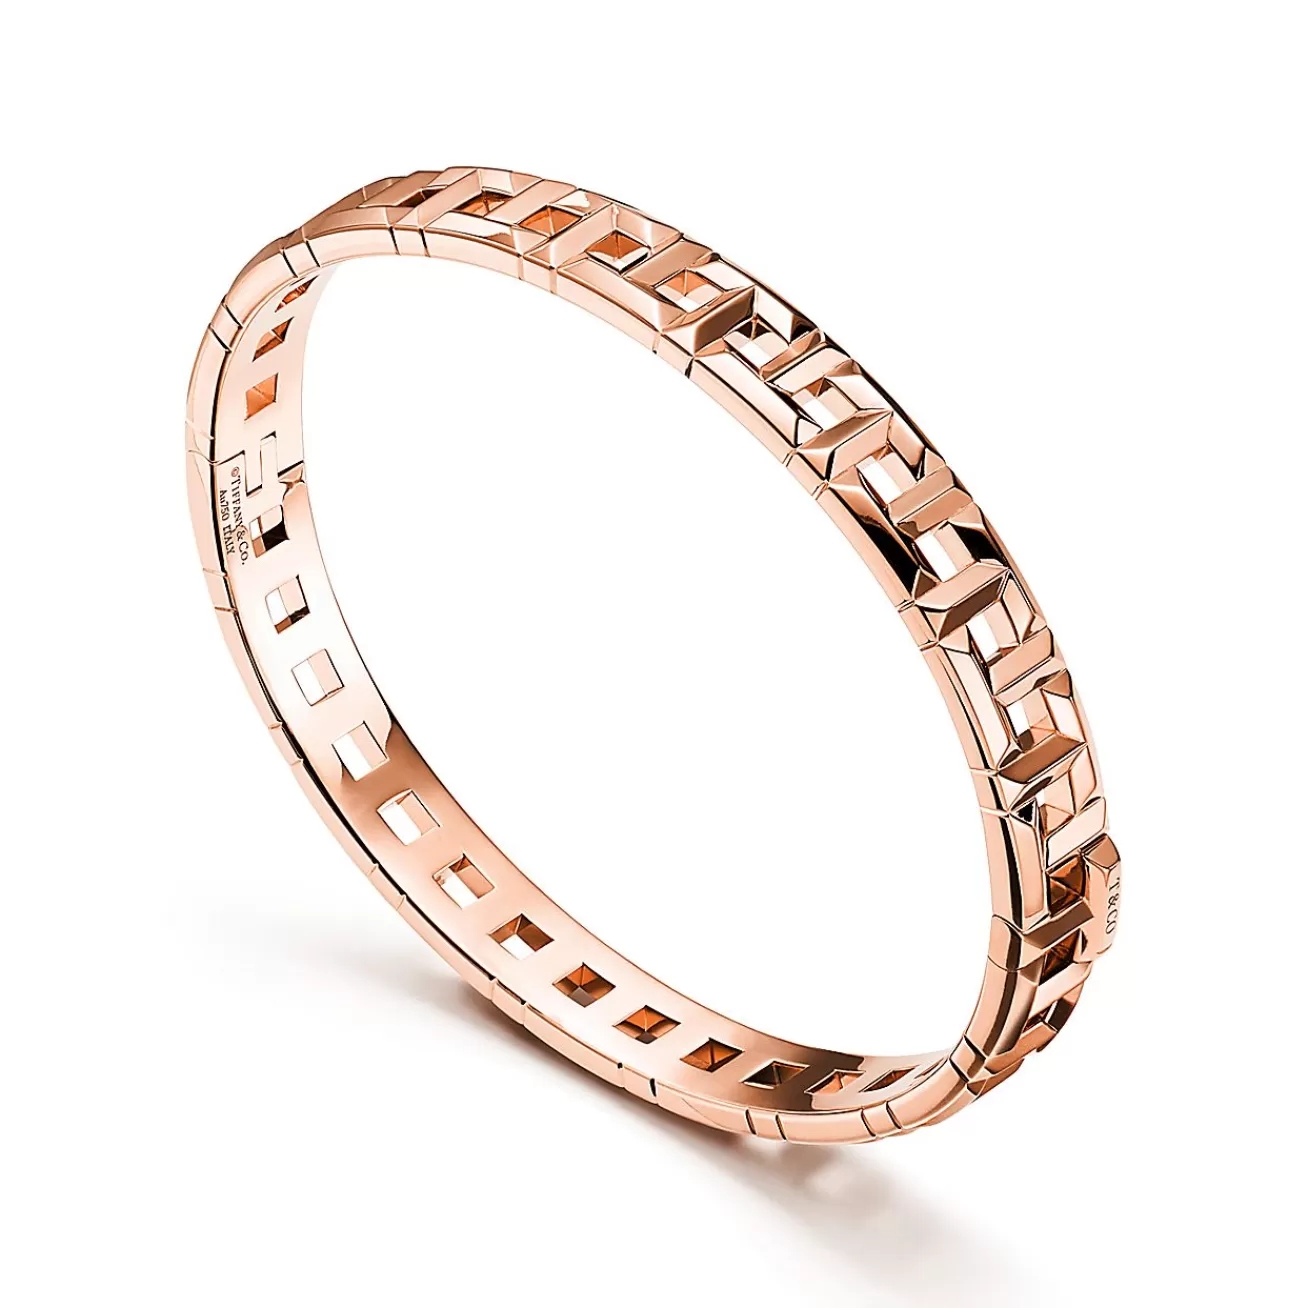 Tiffany & Co. Tiffany T True narrow hinged bangle in 18k rose gold, medium. | ^ Bracelets | Rose Gold Jewelry